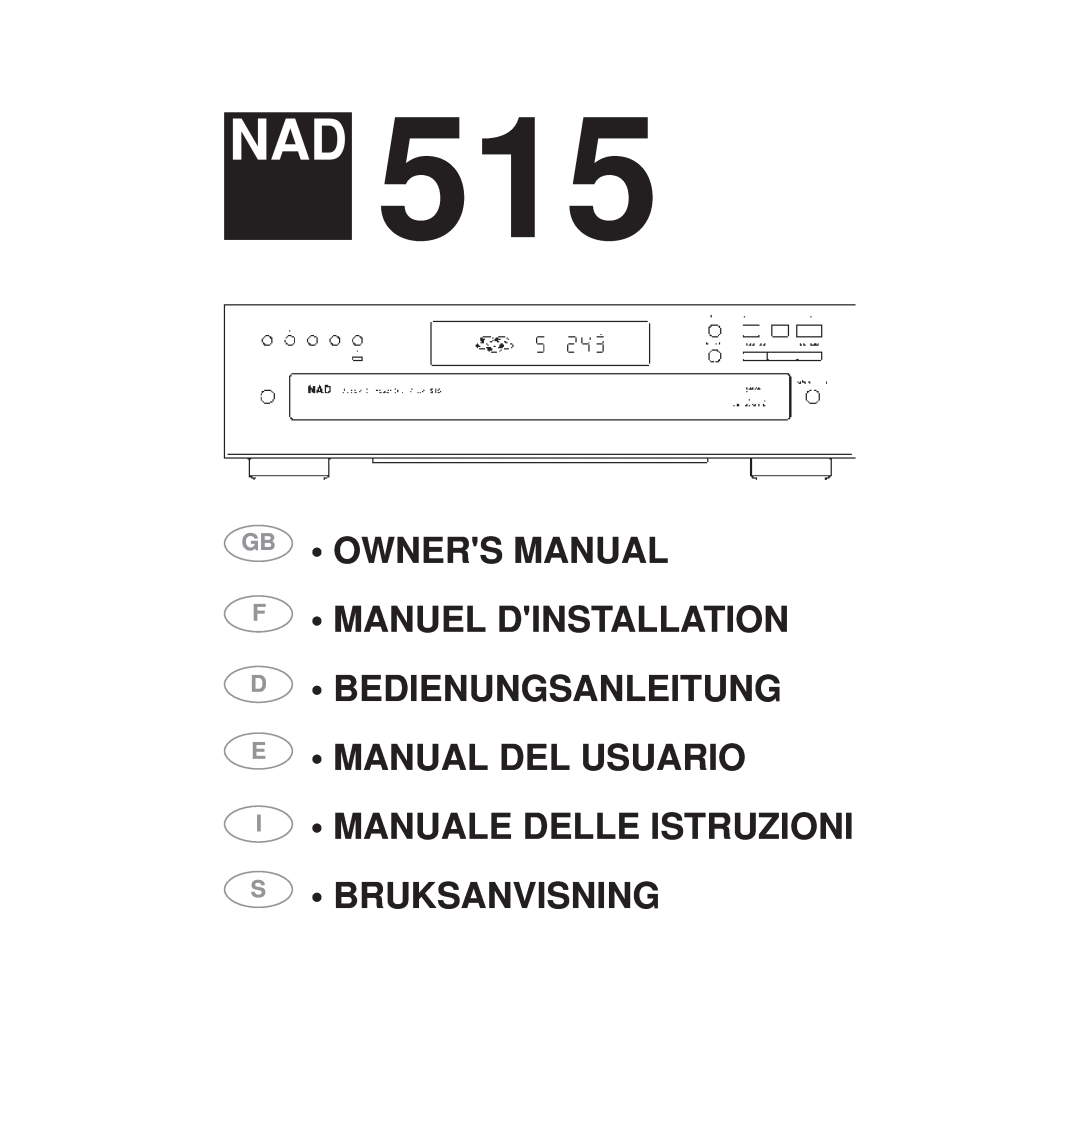 NAD 515 owner manual D Bedienungsanleitung E Manual Del Usuario, I Manuale Delle Istruzioni S Bruksanvisning 